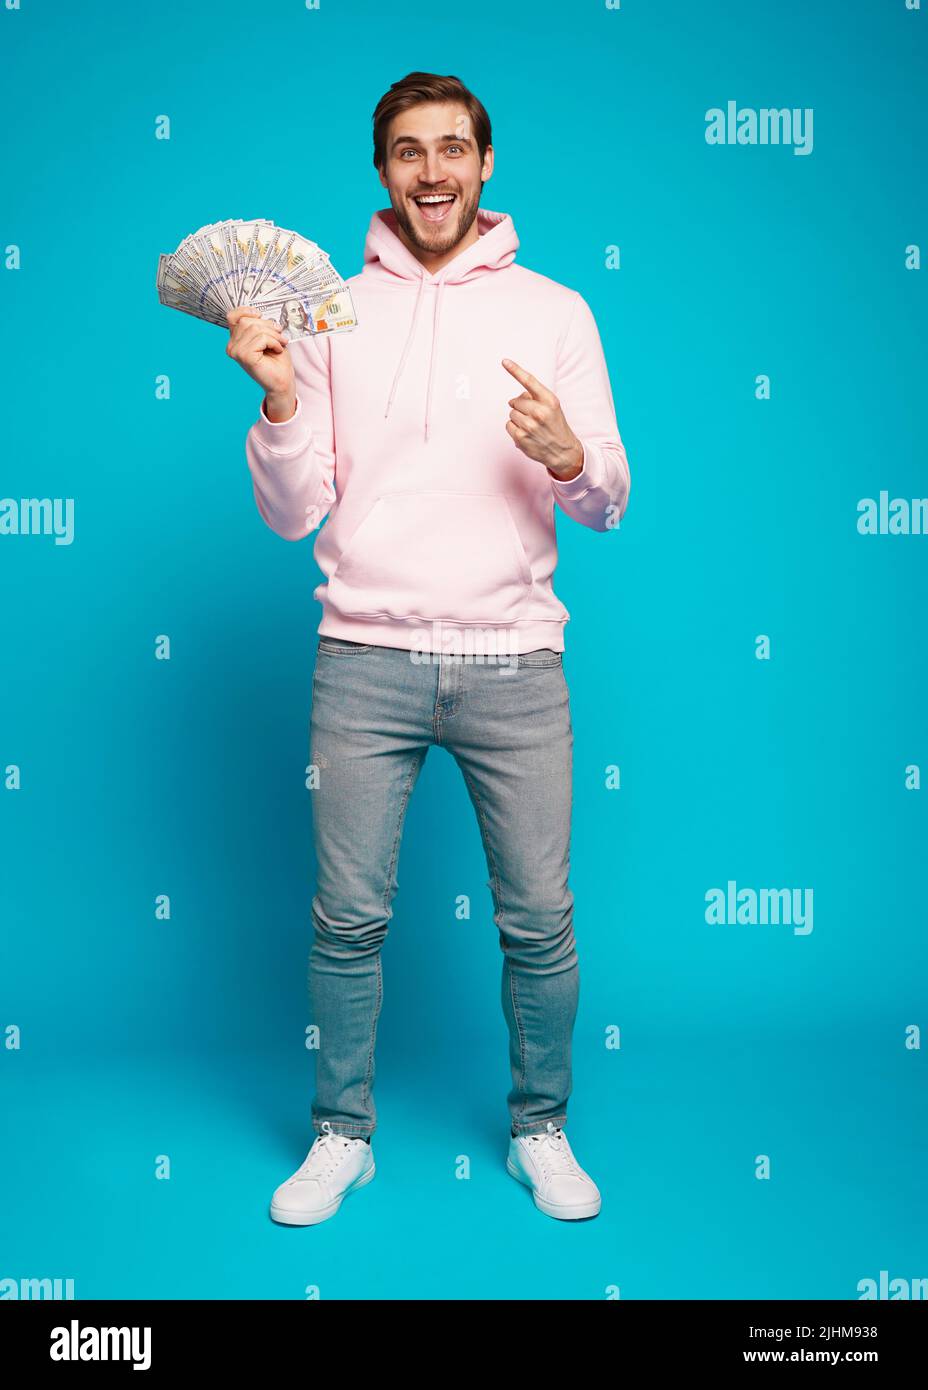 Portrait of a joyful young man holding money cash and celebrating isolated over light blue background Stock Photo